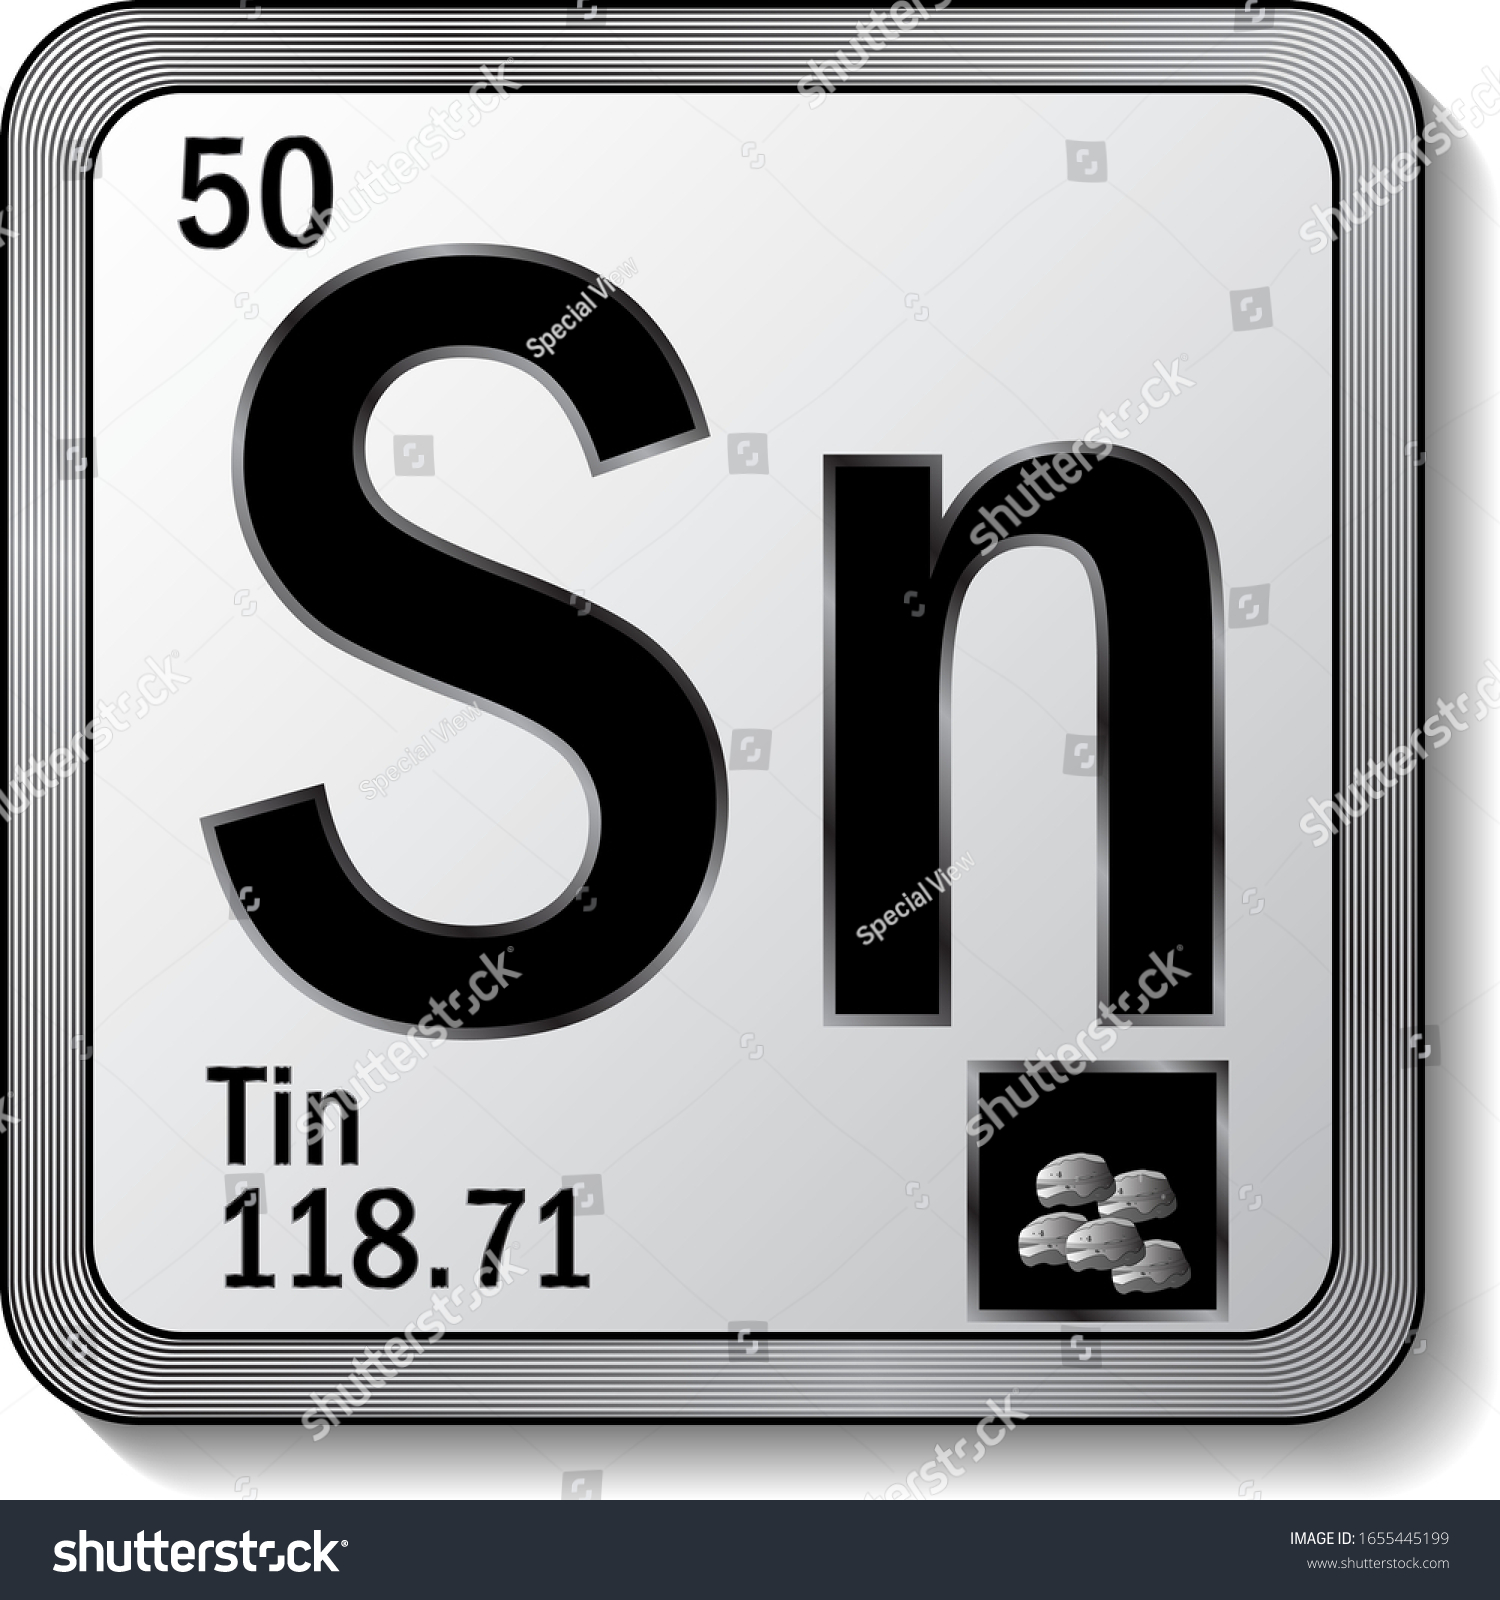 Sn element